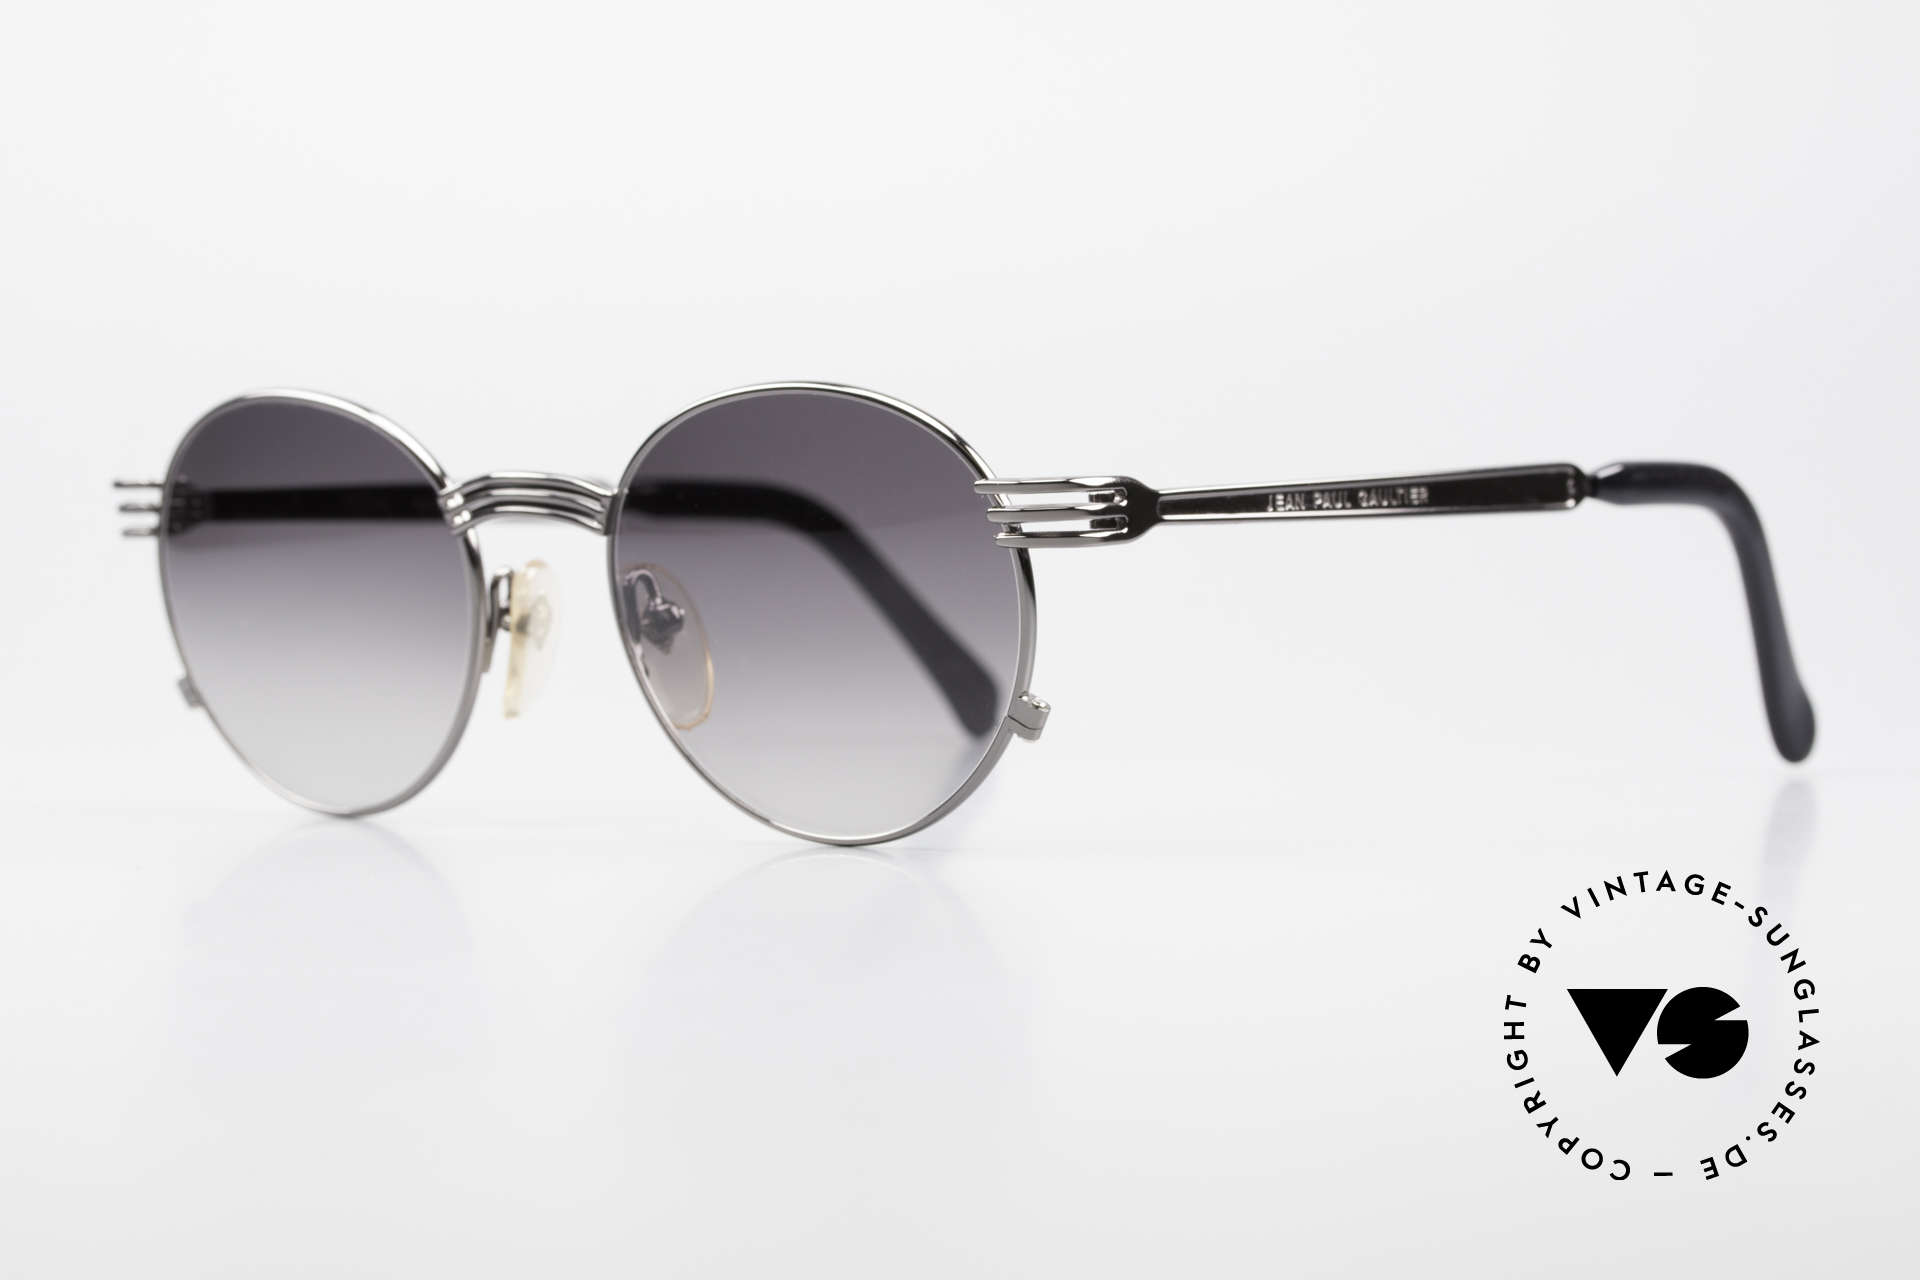 Jean Paul Gaultier 55-3174 Designer Vintage 90's Glasses, tangible top-notch craftsmanship; frame made in Japan, Made for Men and Women